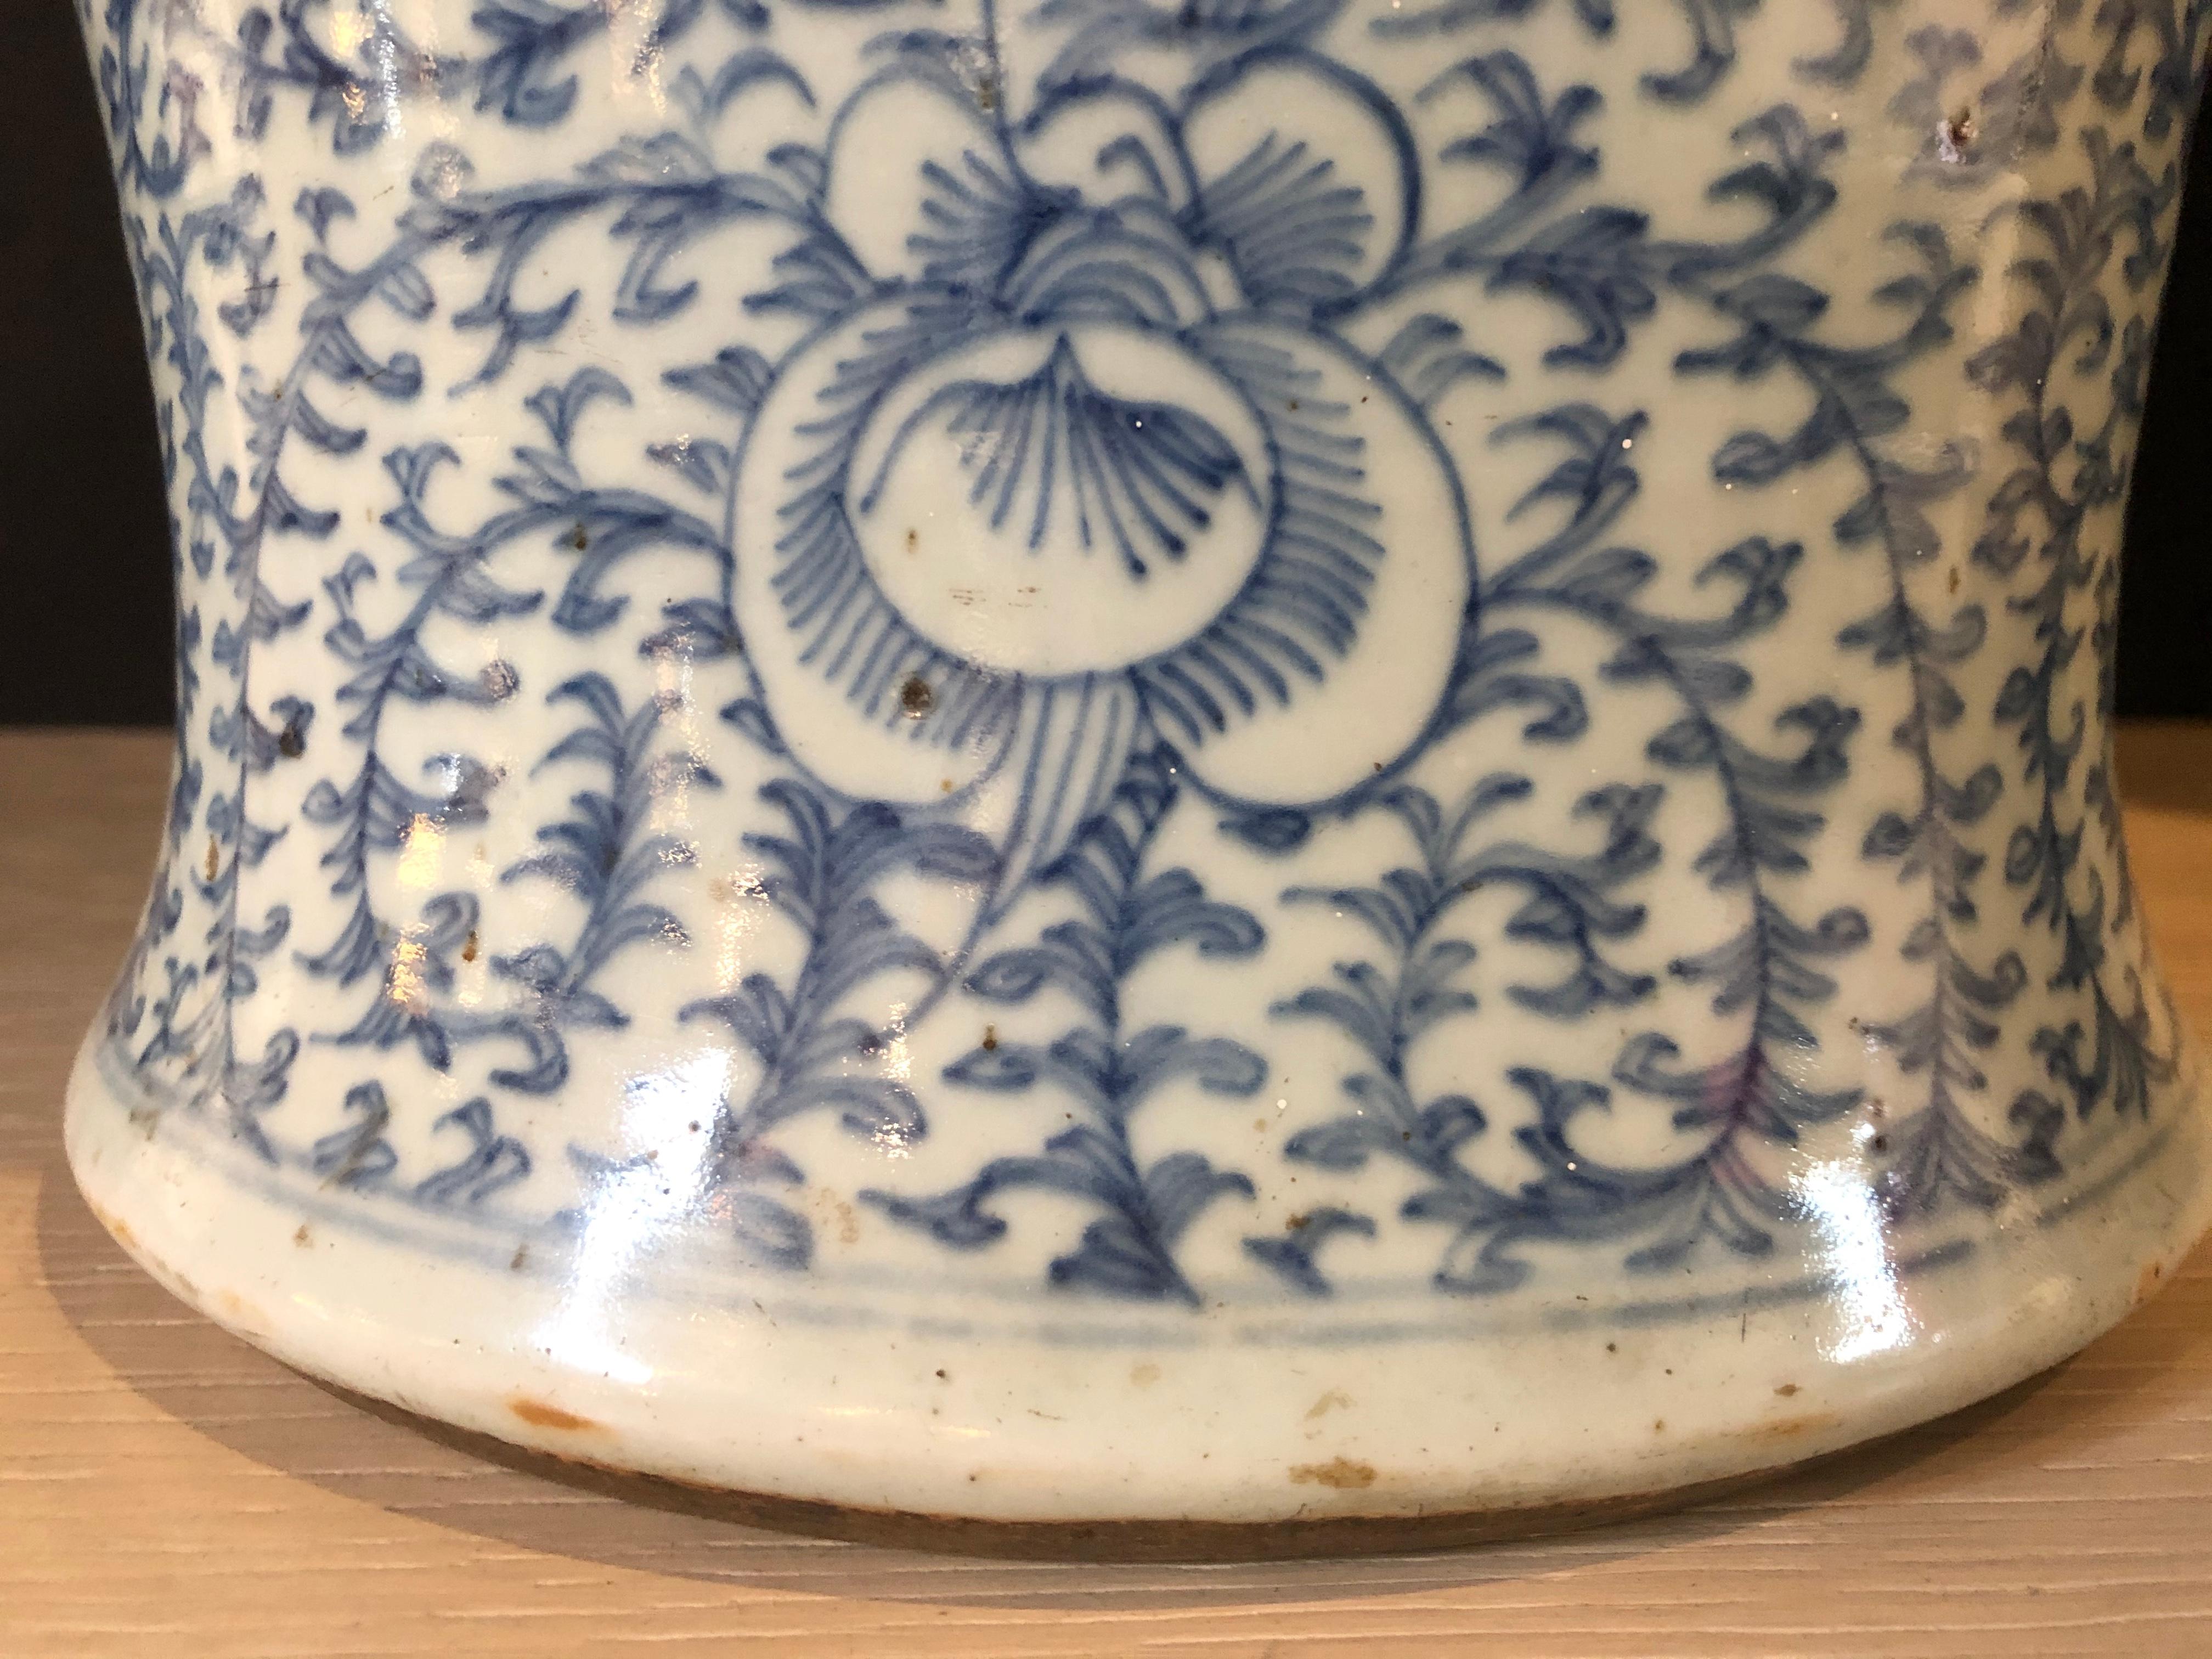 Blue and White Chinese Lidded Ginger Jar, Vase or Urn, Signed on Bottom For Sale 1